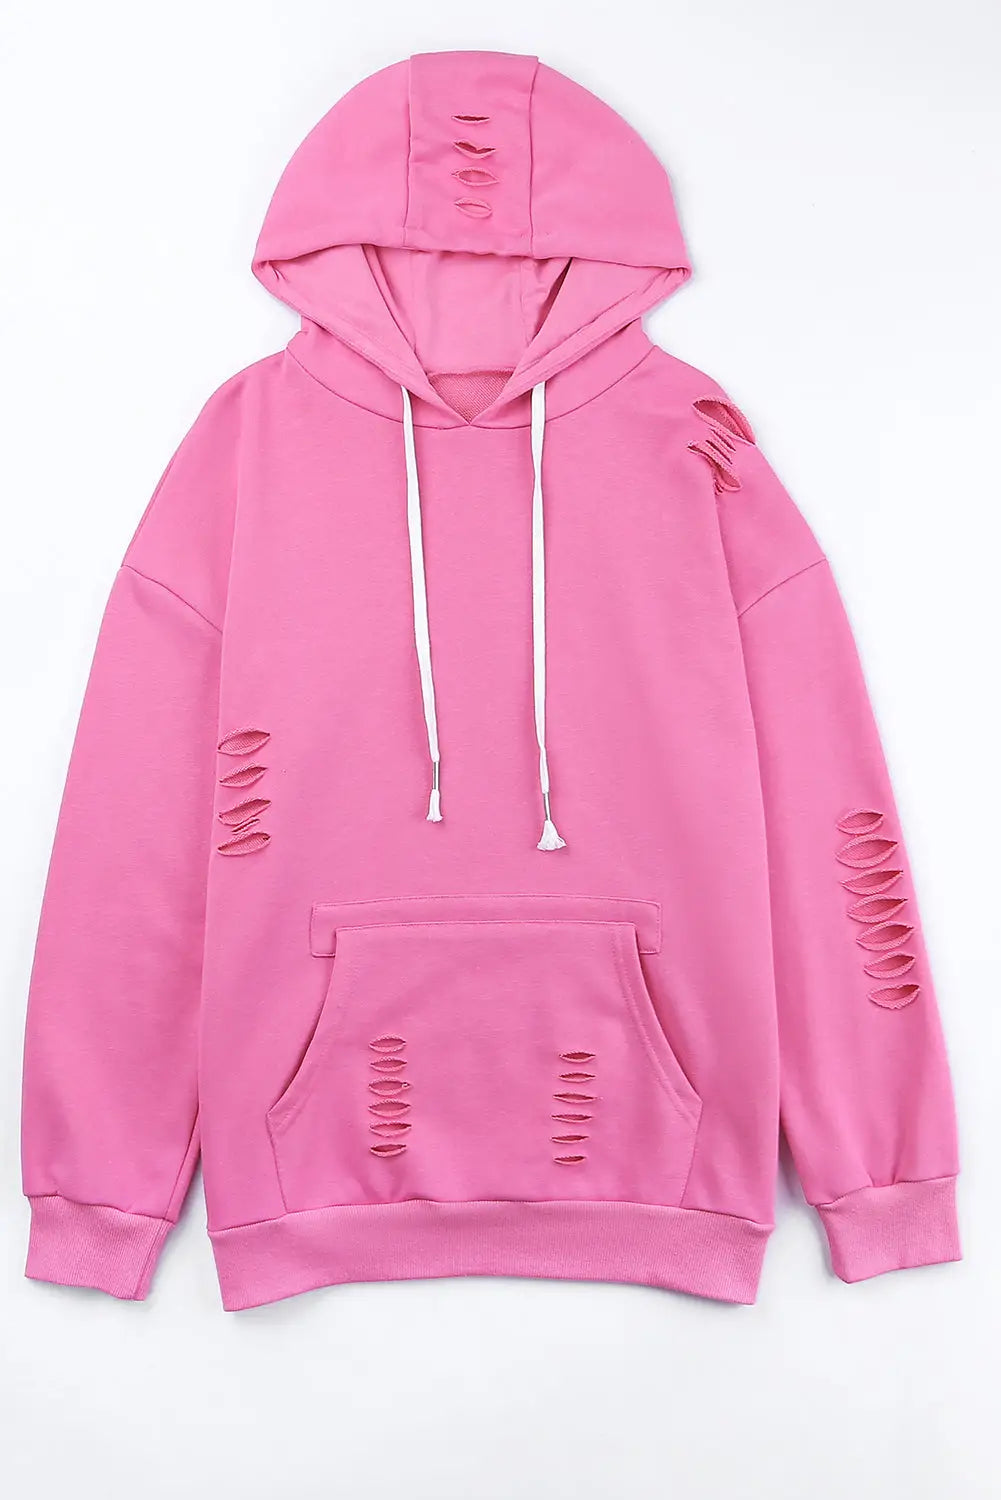 Pink solid ripped hooded sweatshirt with kangaroo pocket - sweatshirts & hoodies